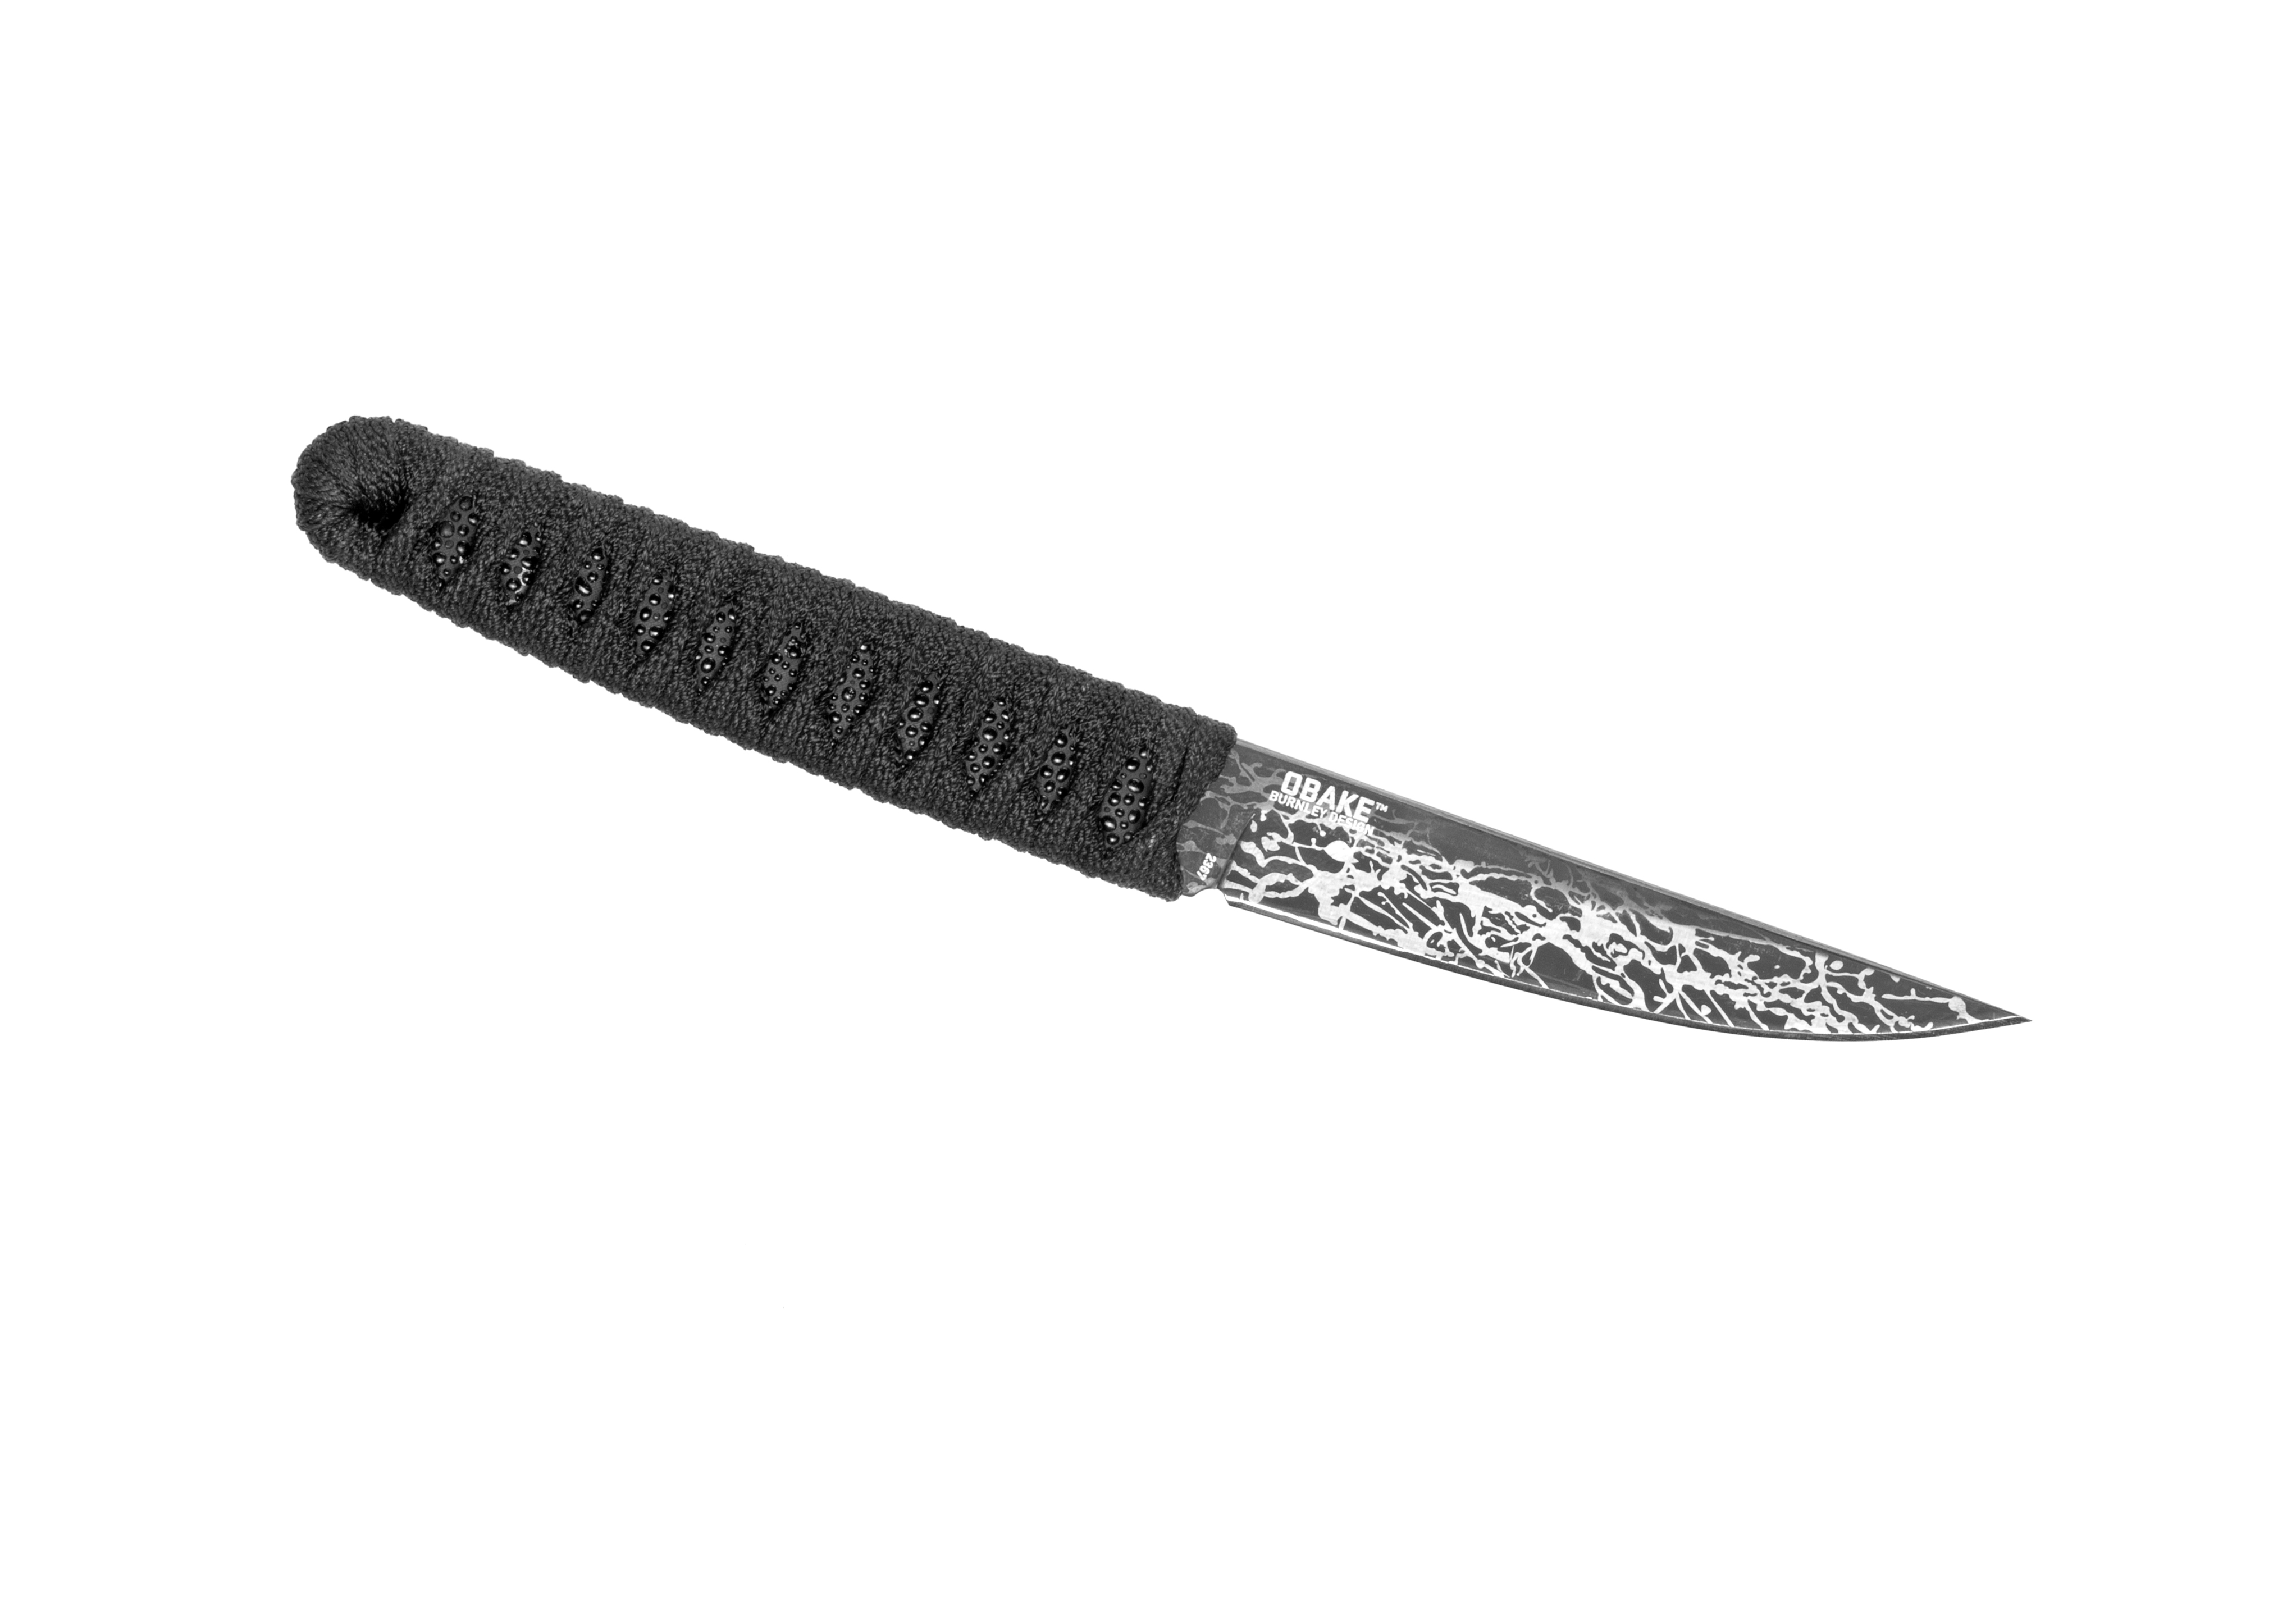 4-in-1 Kitchen knife sharpening tool - Digital Cheek